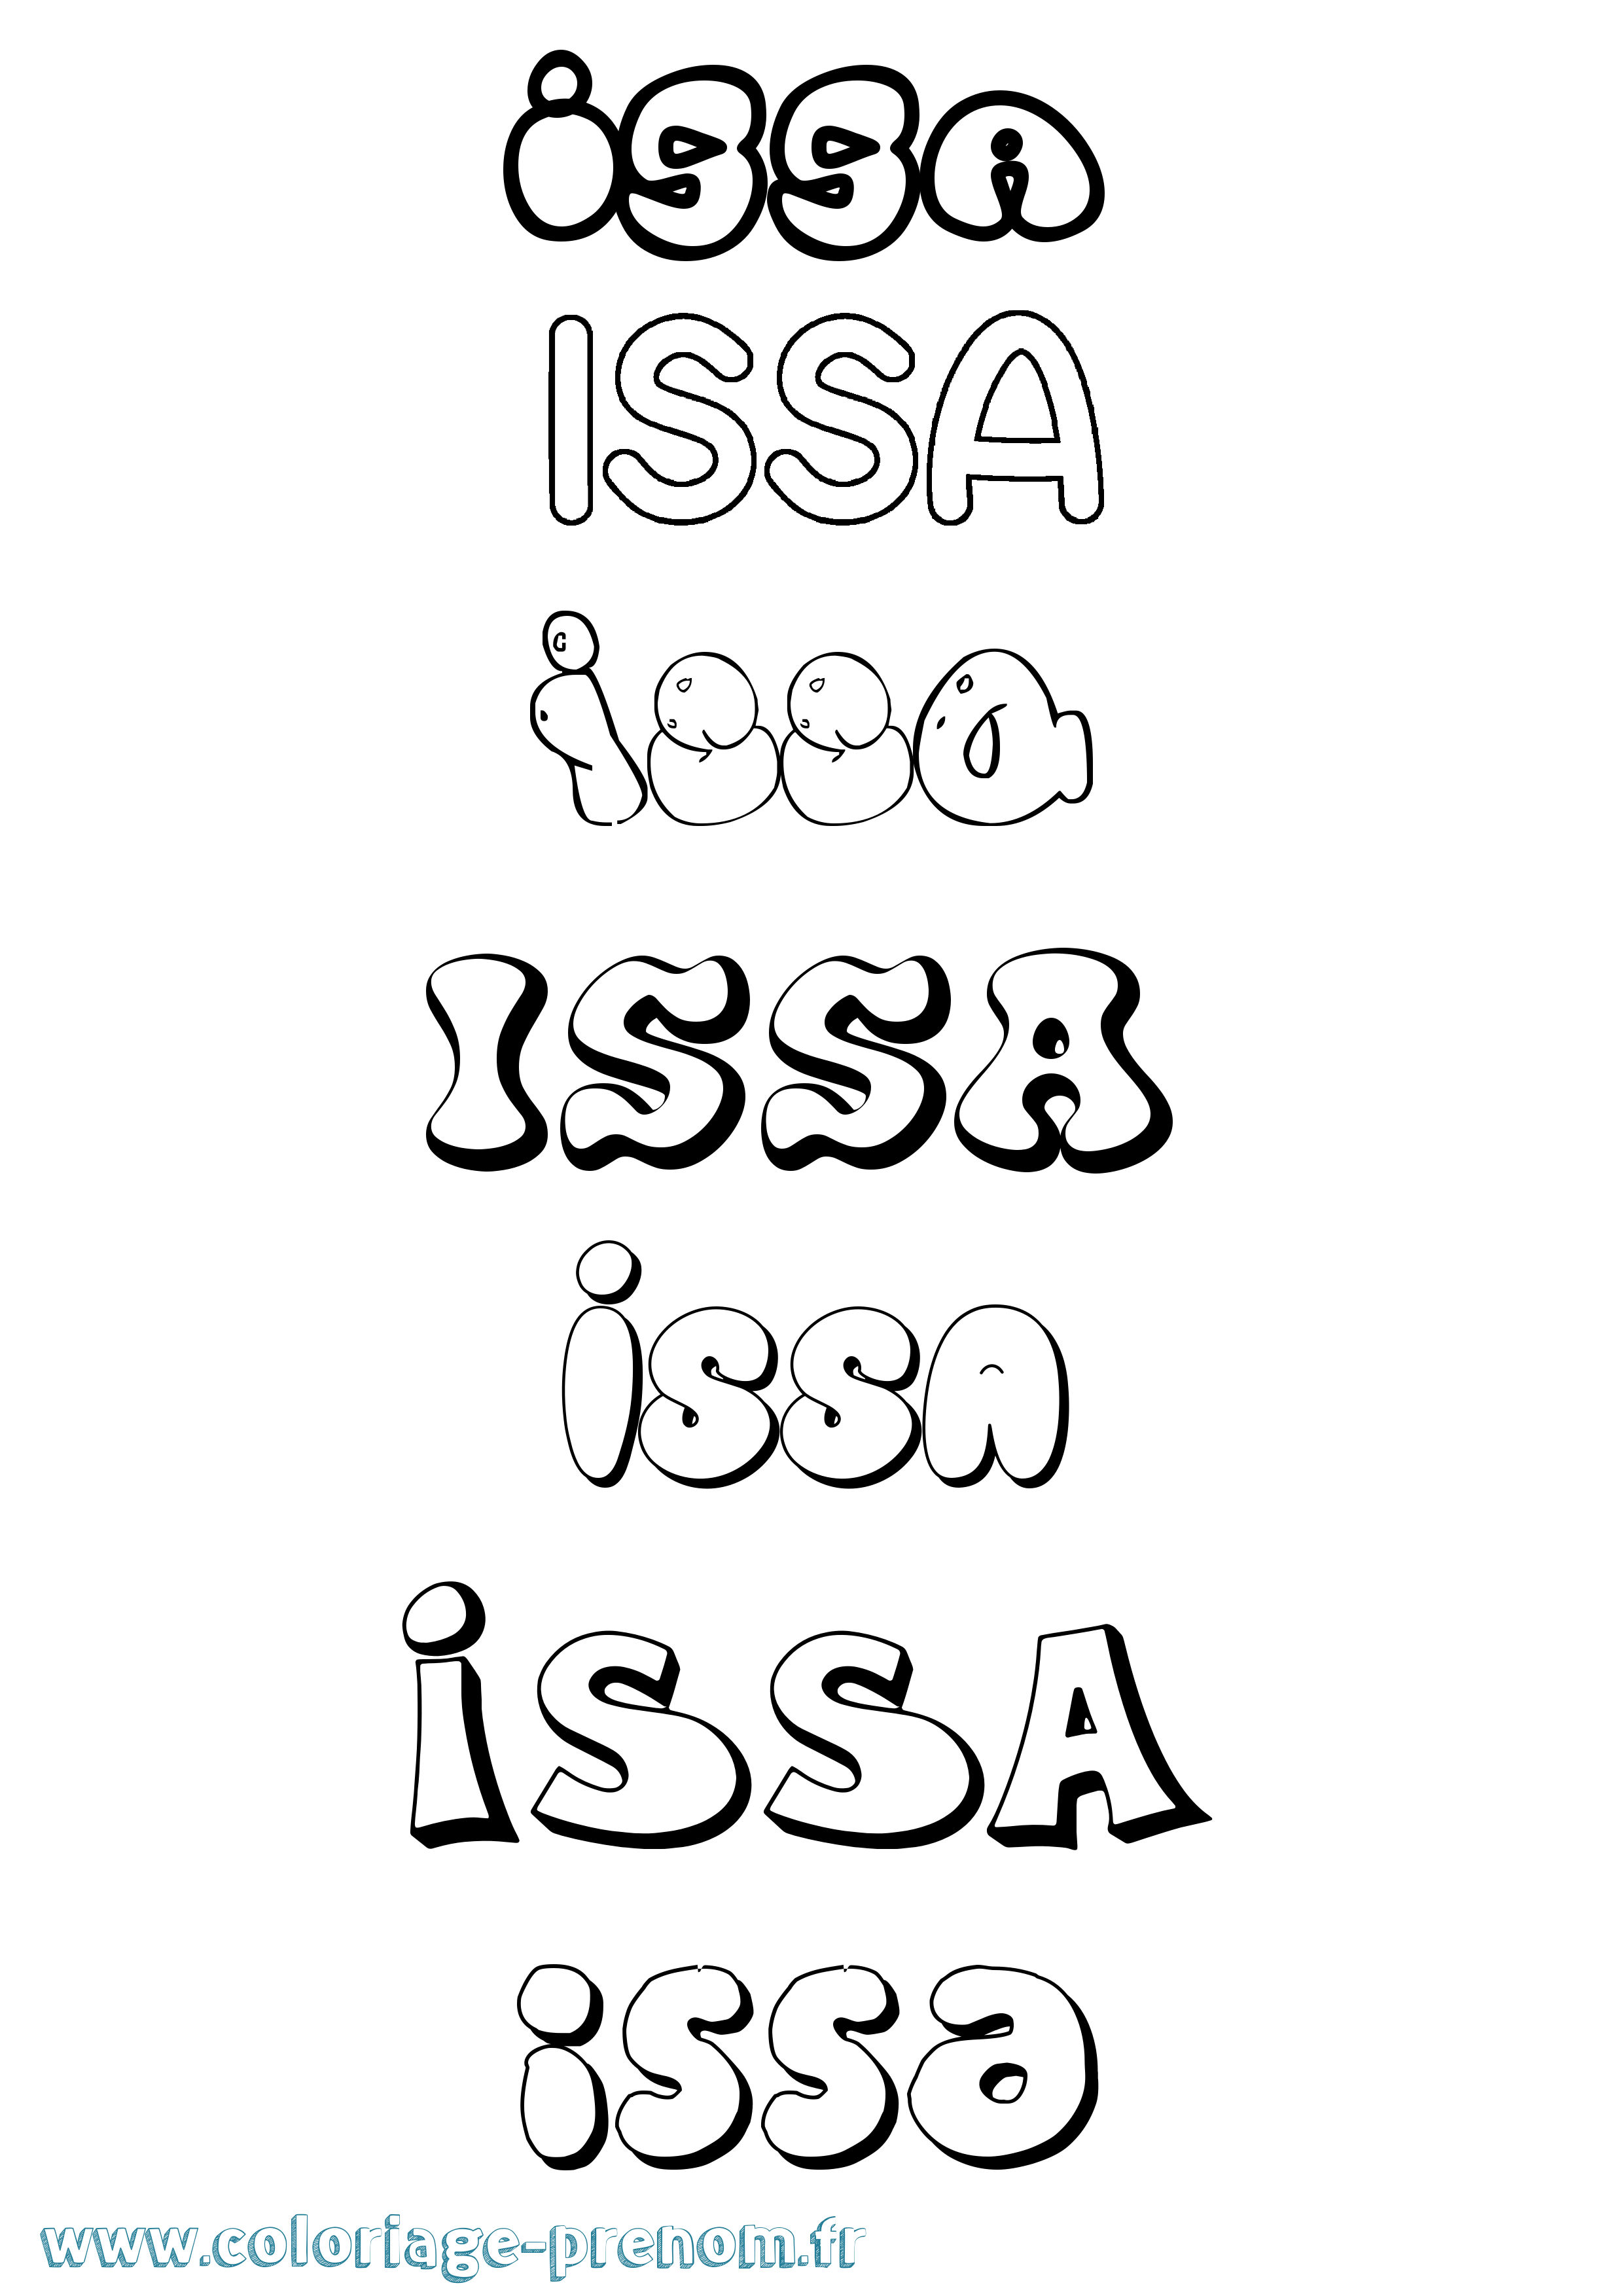 Coloriage prénom Issa